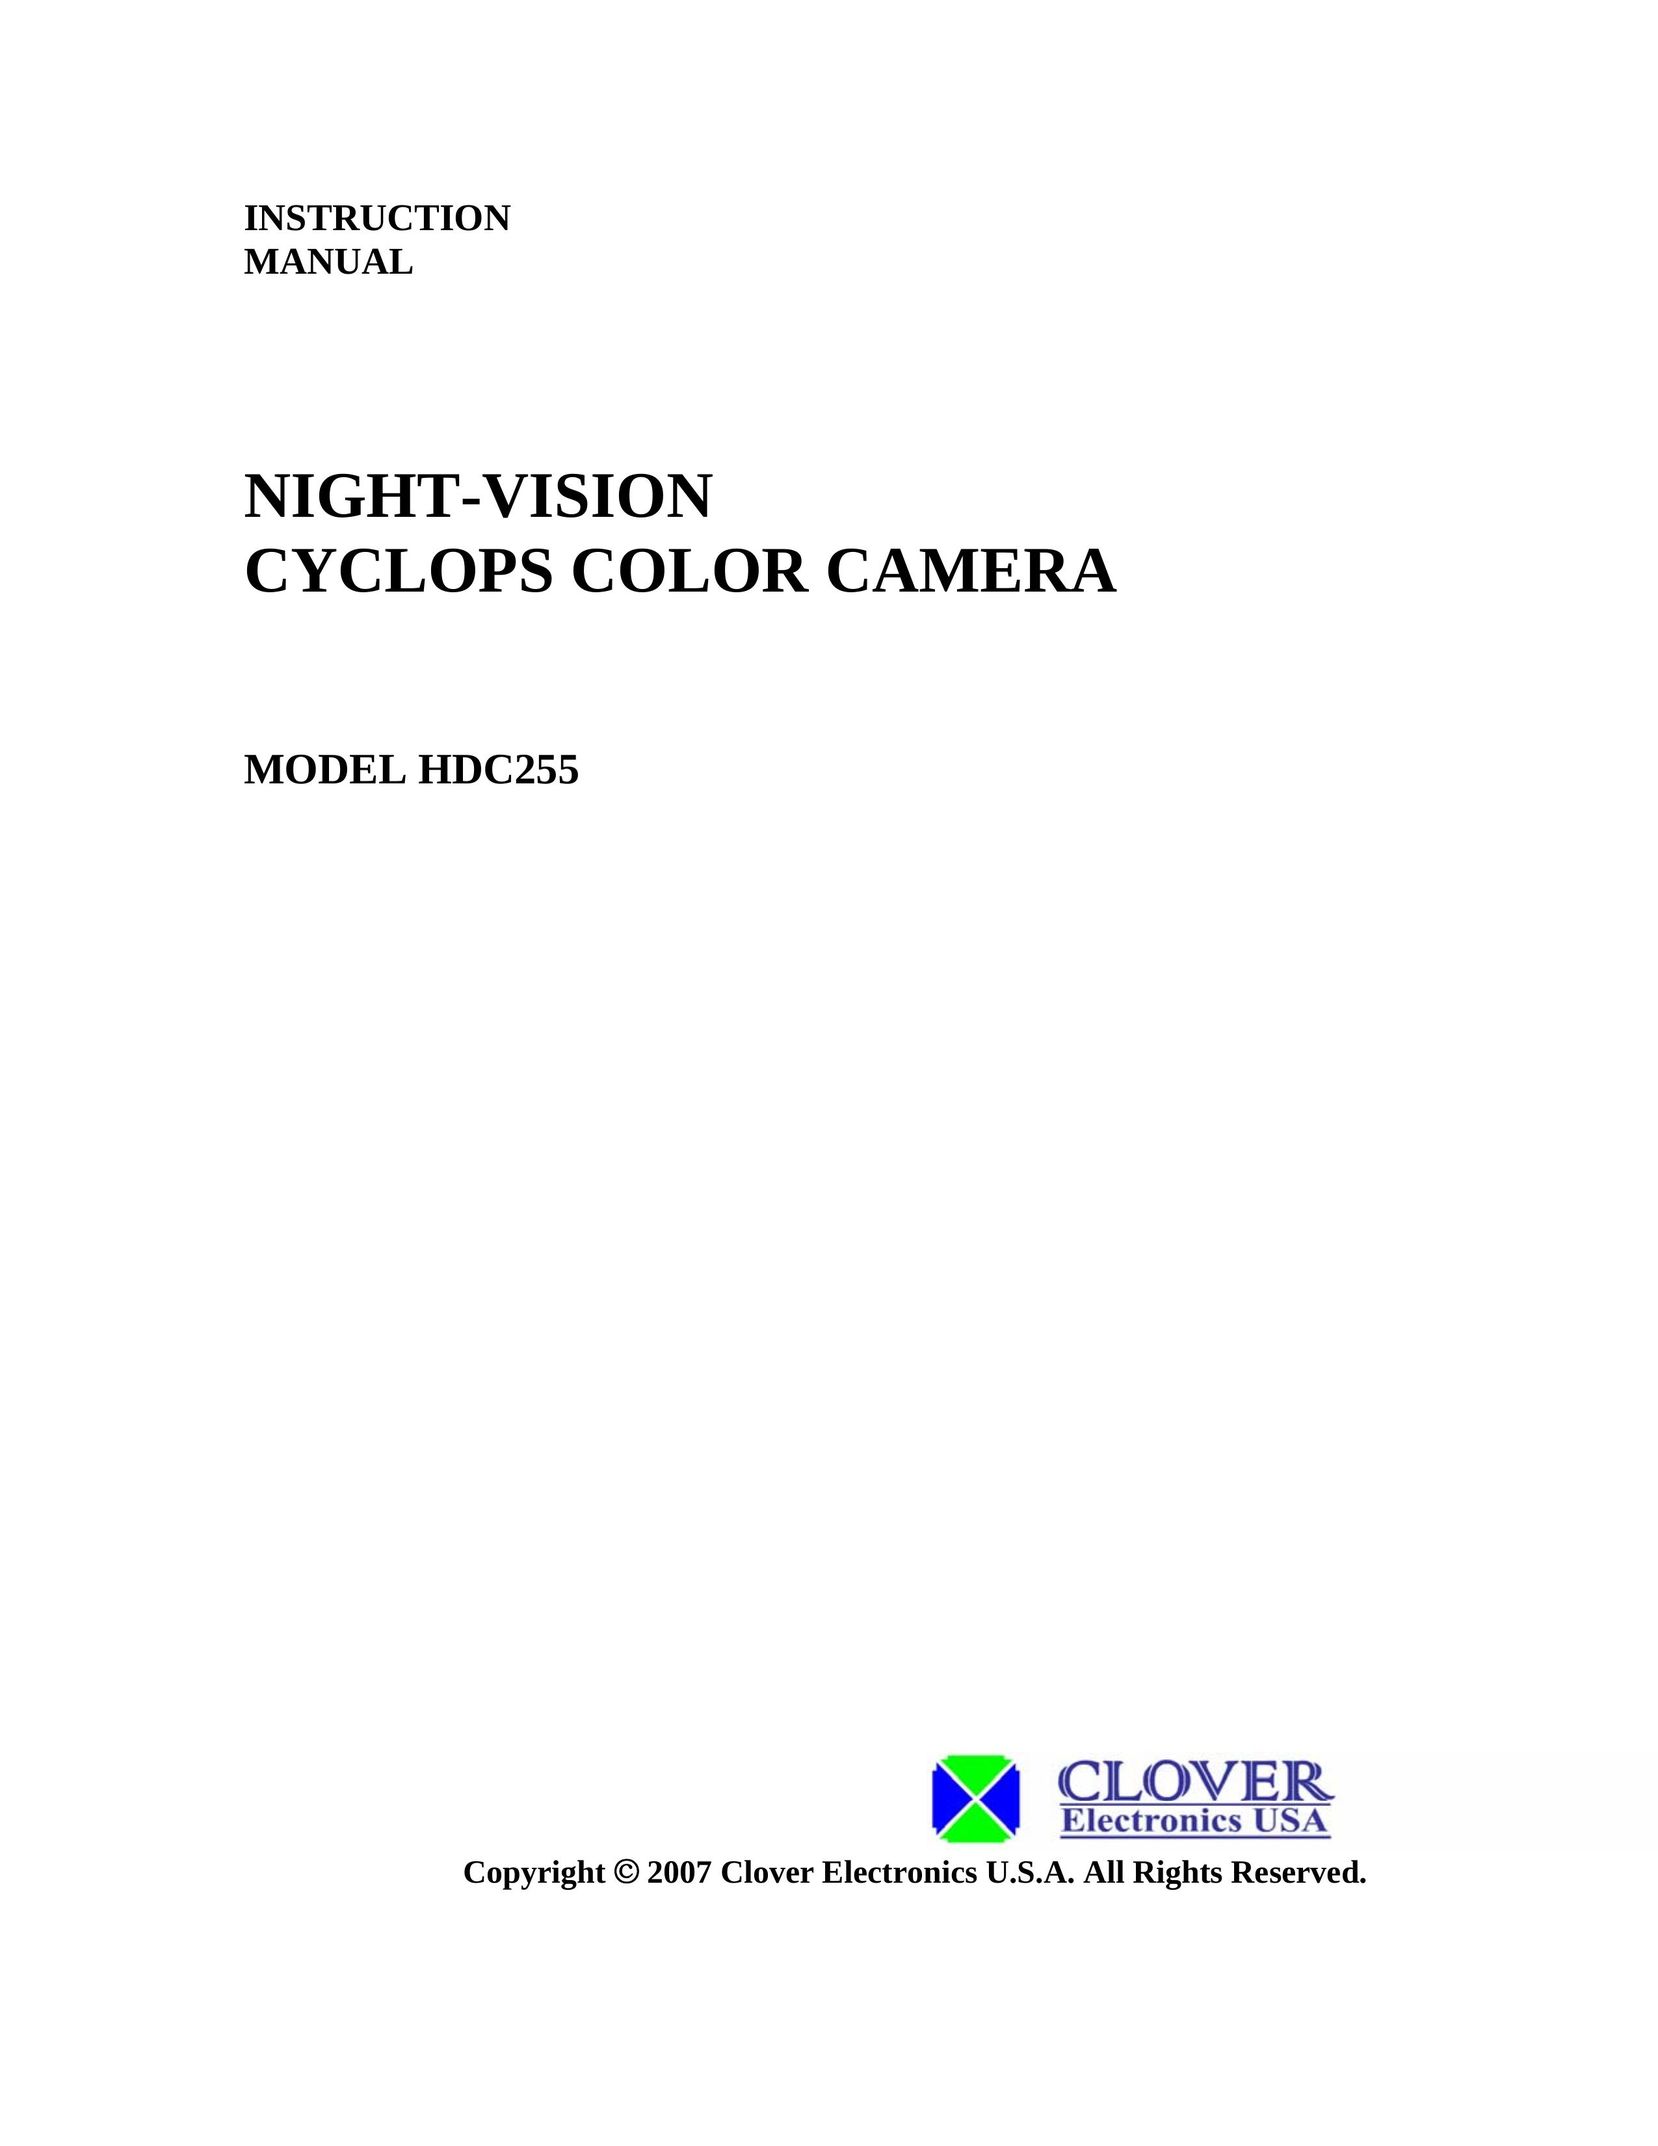 Clover Electronics HDC255 Binoculars User Manual